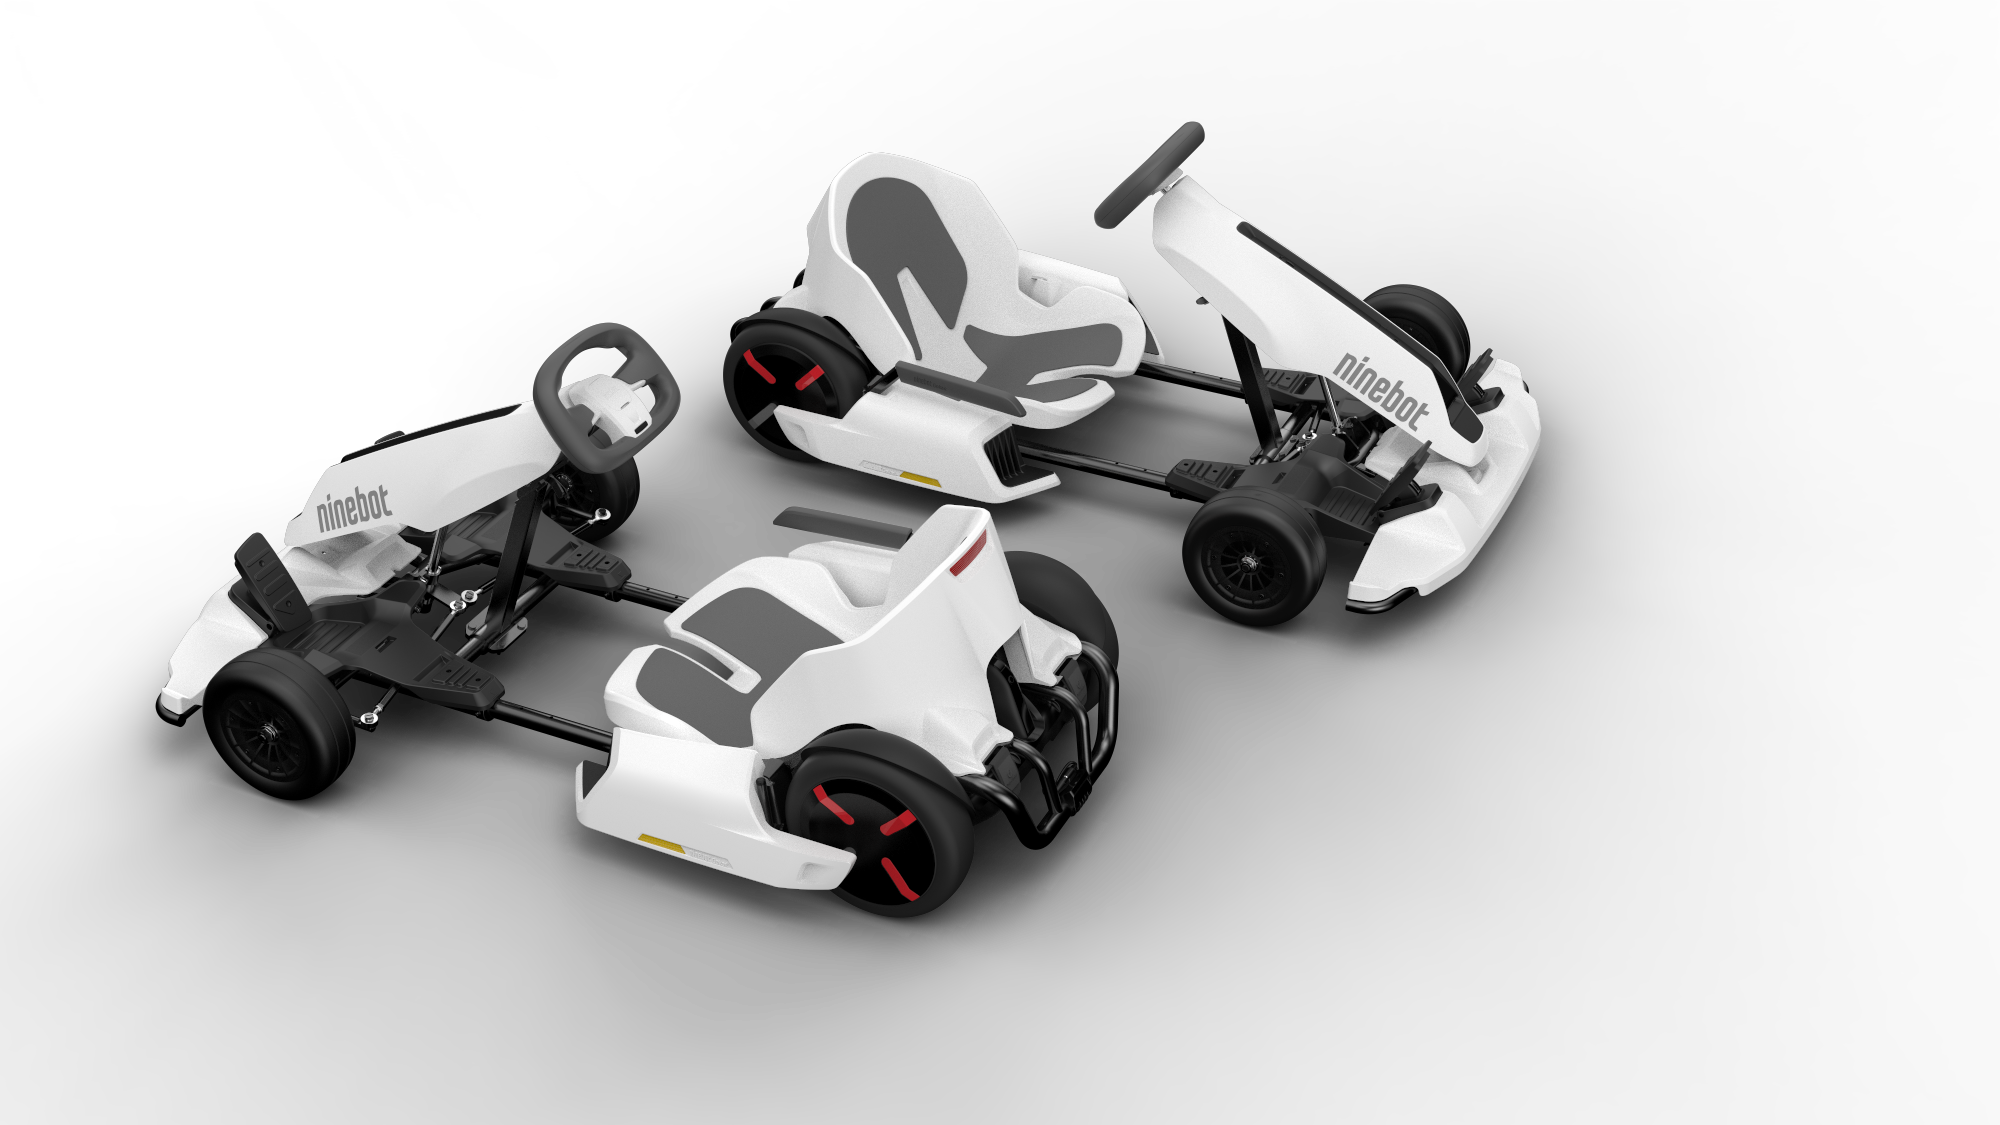 Xiaomi Ninebot Gokart Kit. Ninebot go Kart Kit. Segway-Ninebot go Kart Kit. Картинг Ninebot Gokart Pro. Мини гоу